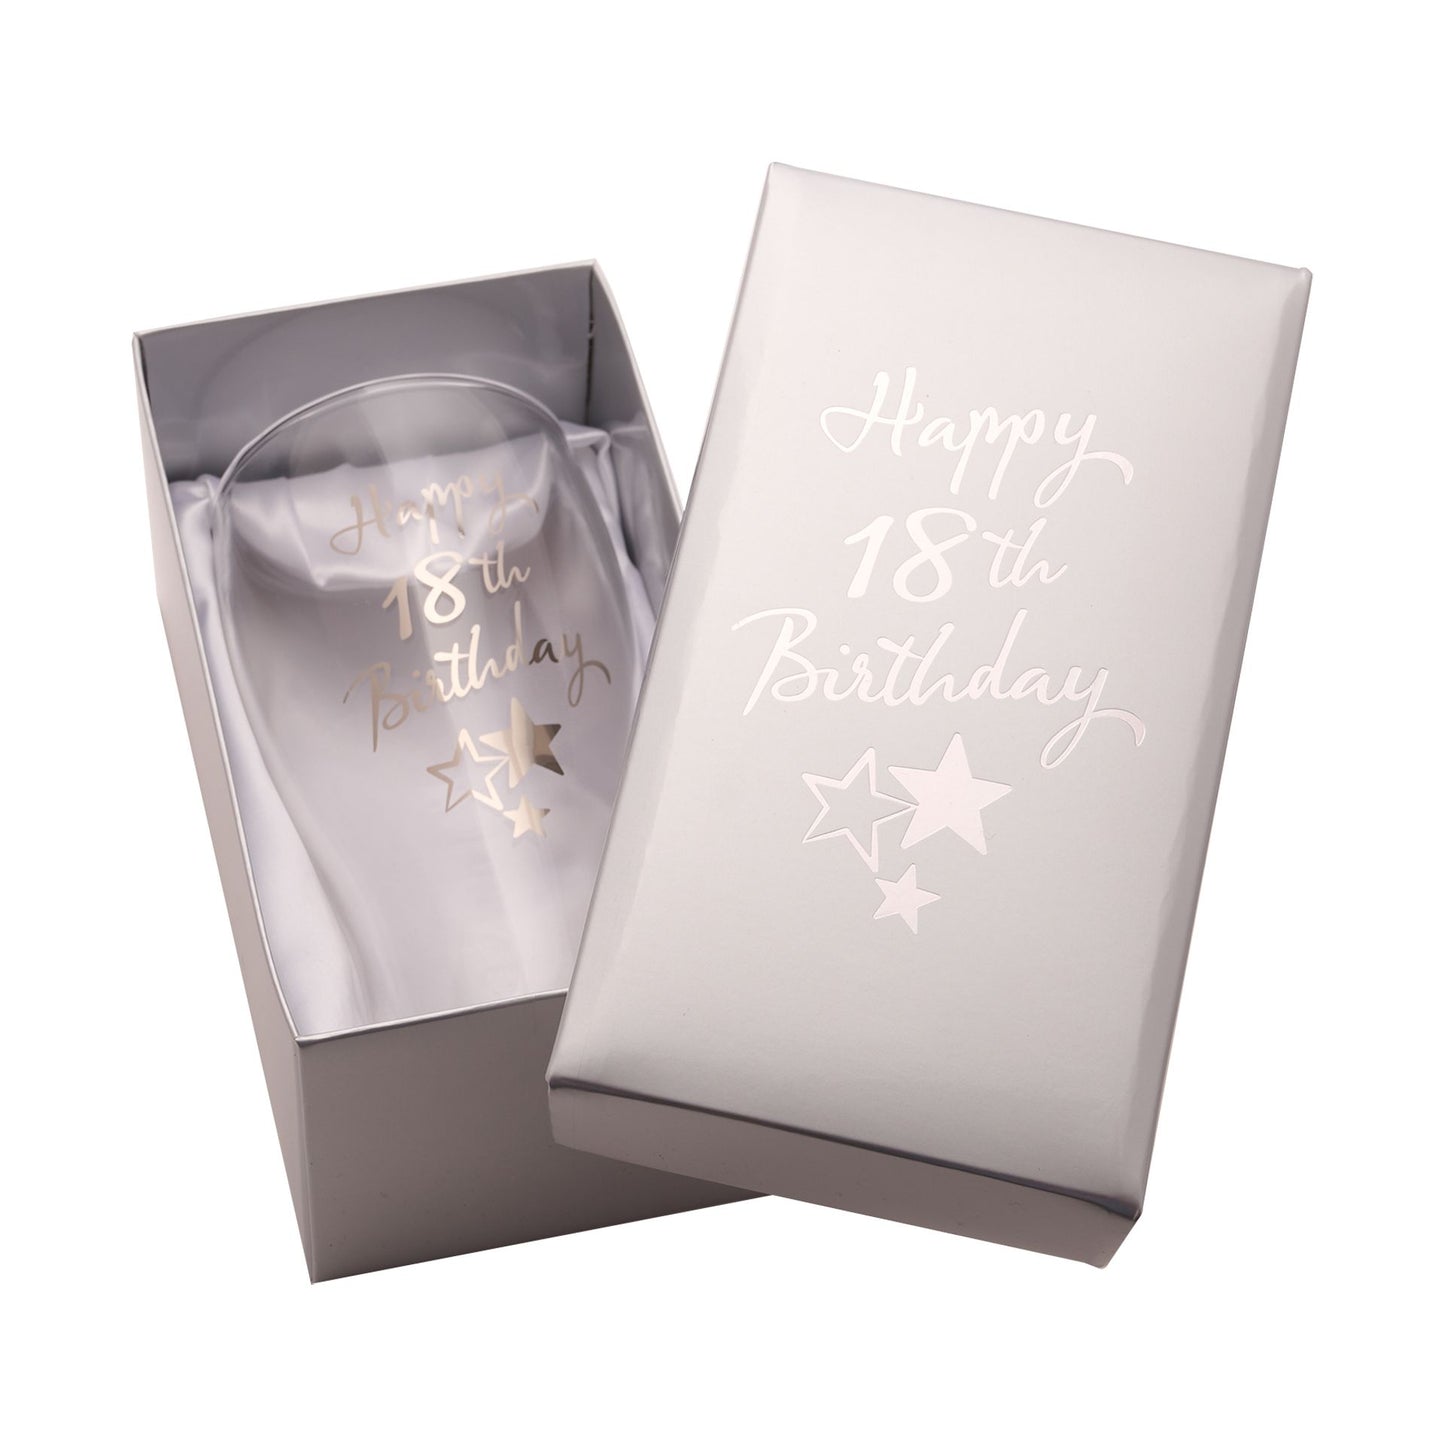 Juliana Happy 18th Birthday Gift - Pint Glass in Gift Box